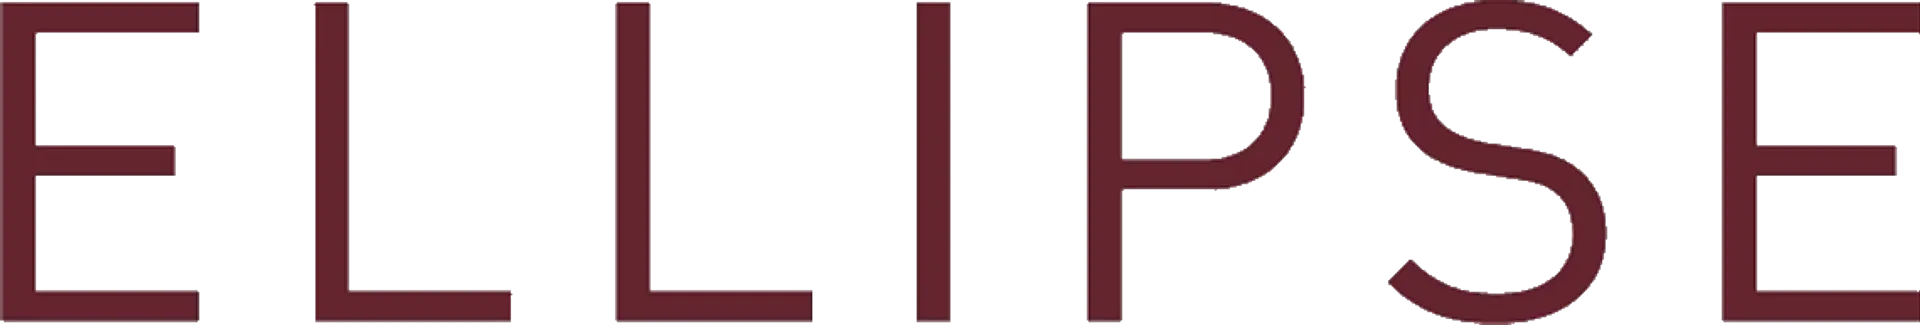 ELLIPSE logo de catálogo